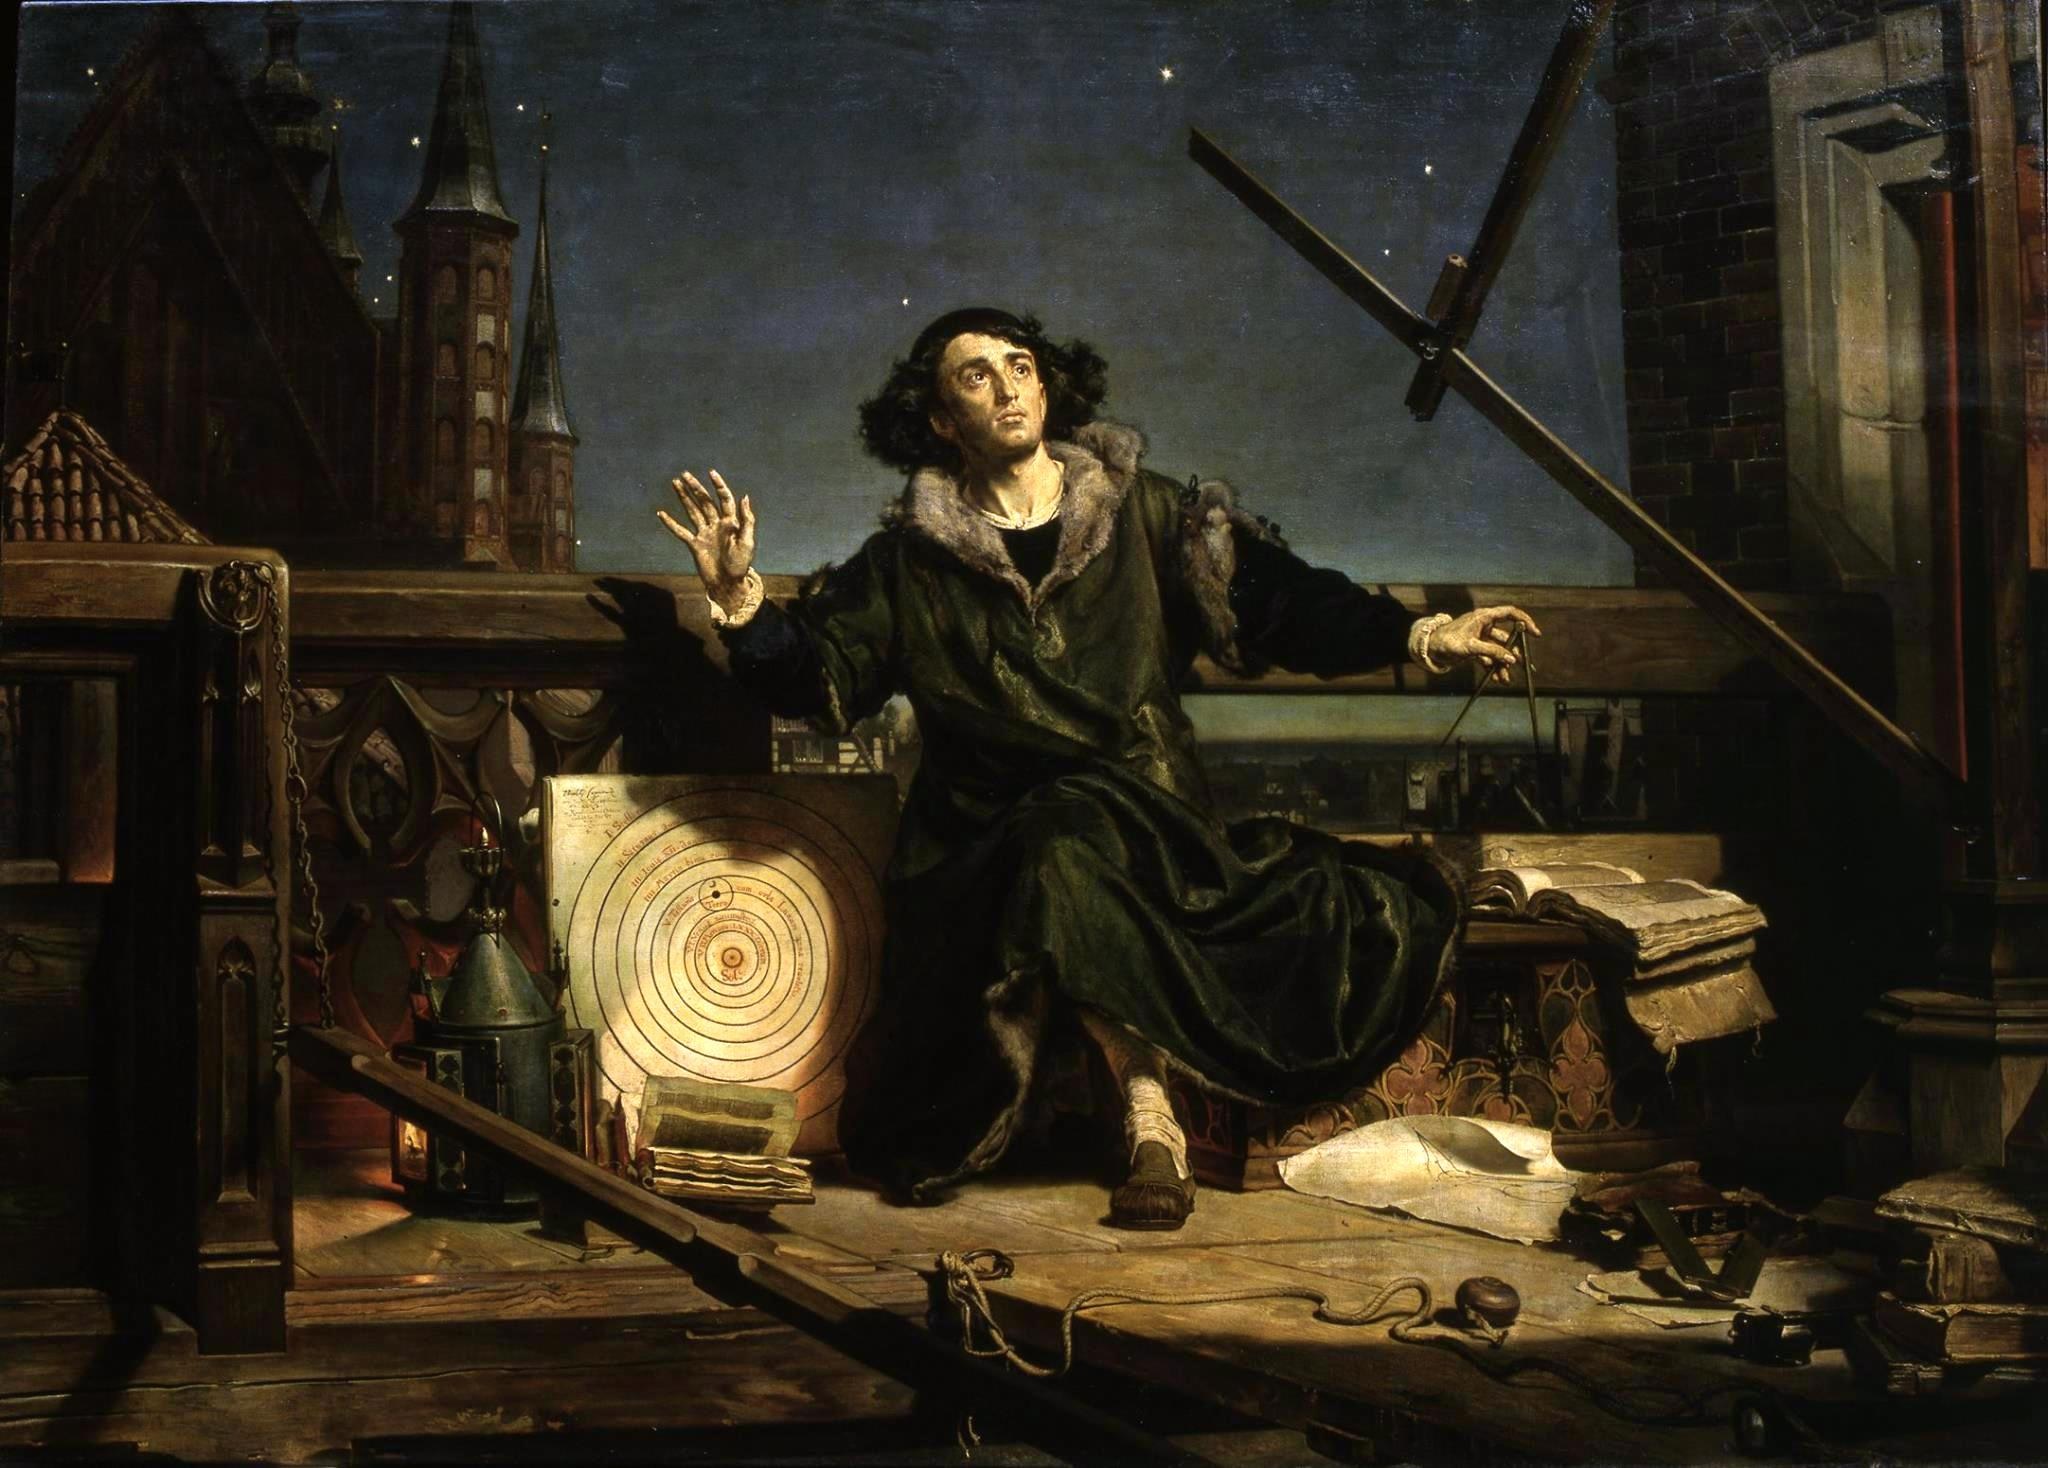 Discover Copernicus in Krakow